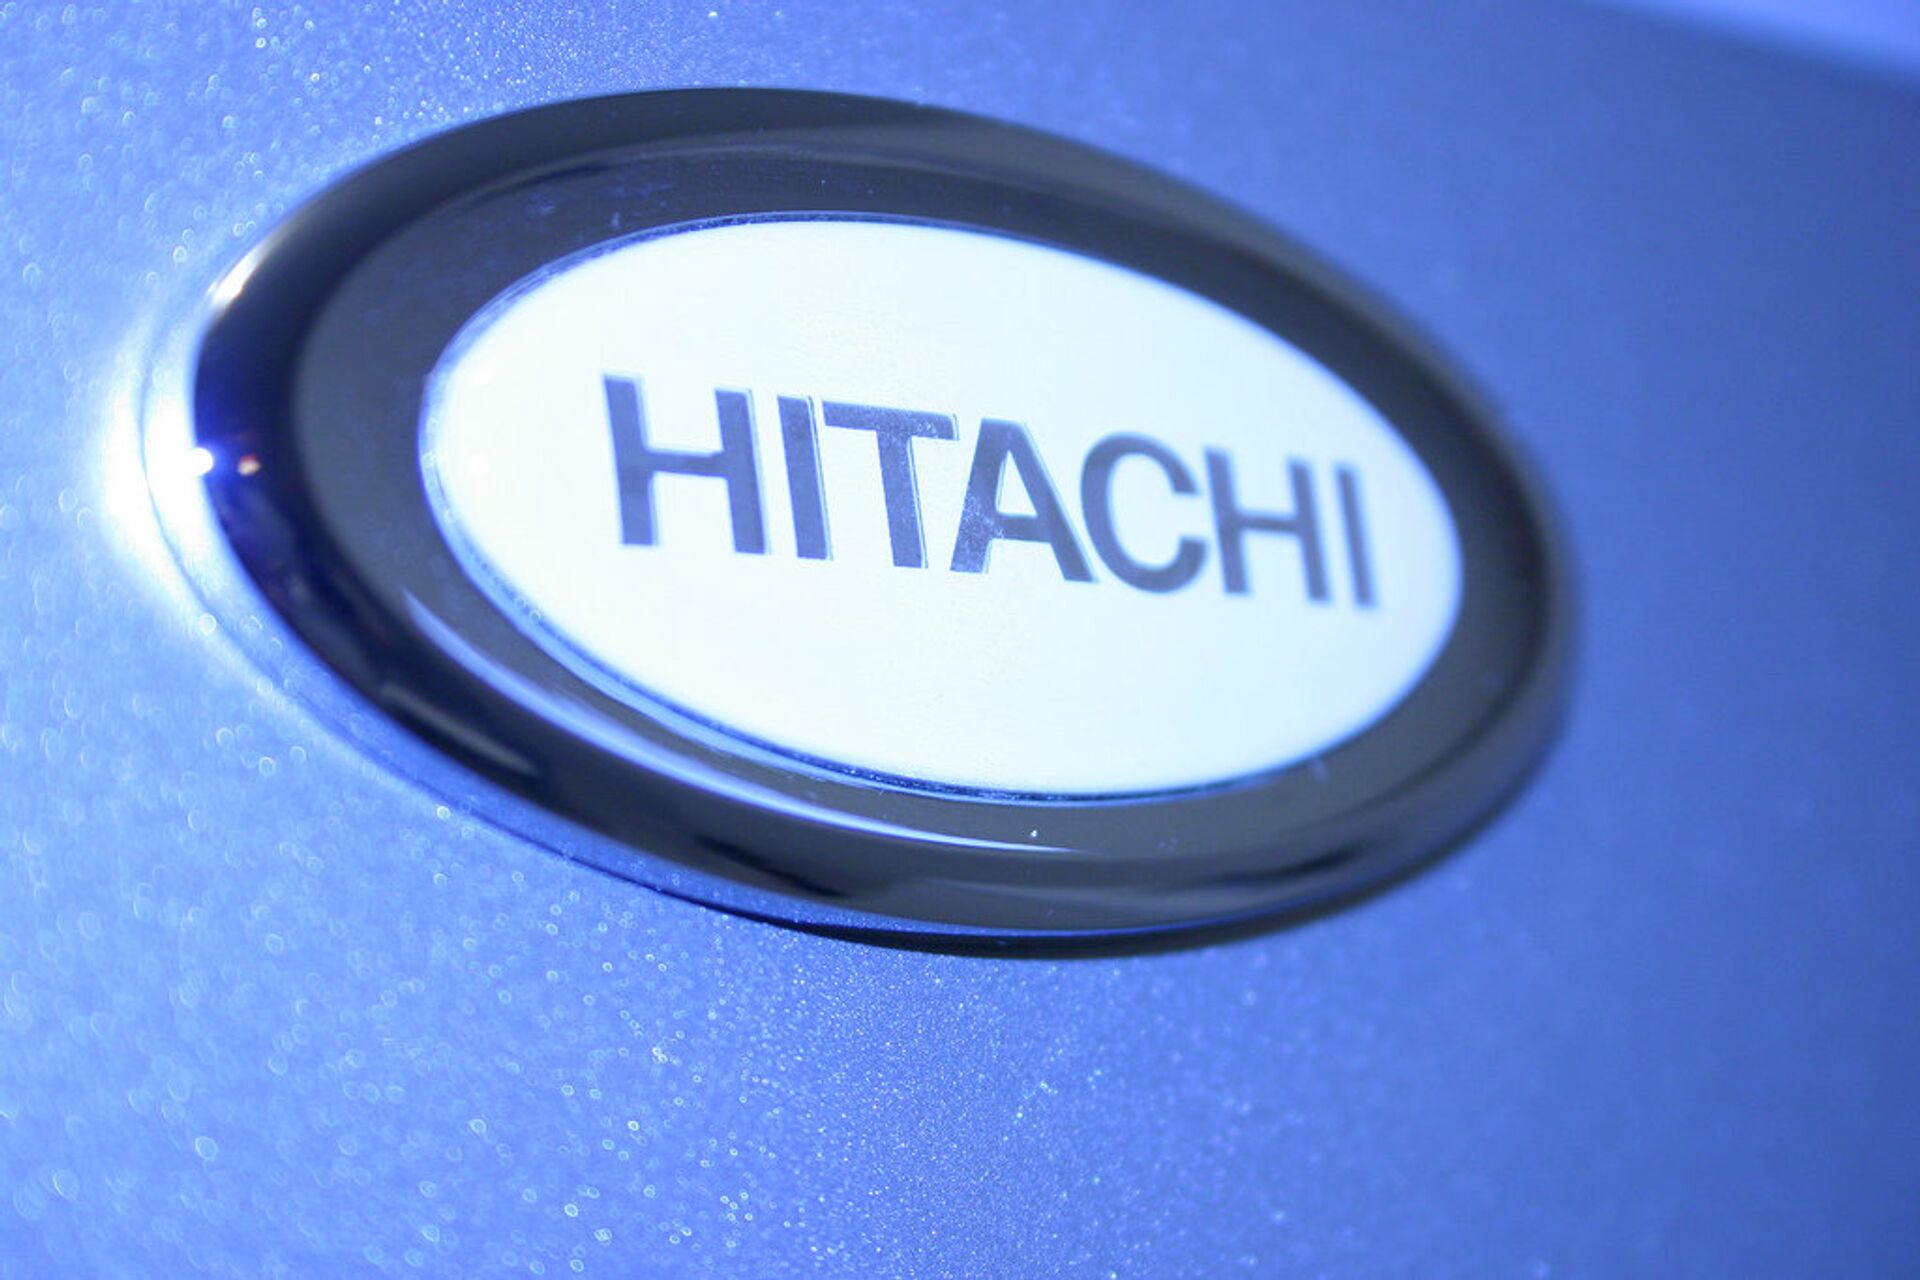 Hitachi - ПРАЙМ, 1920, 28.12.2022